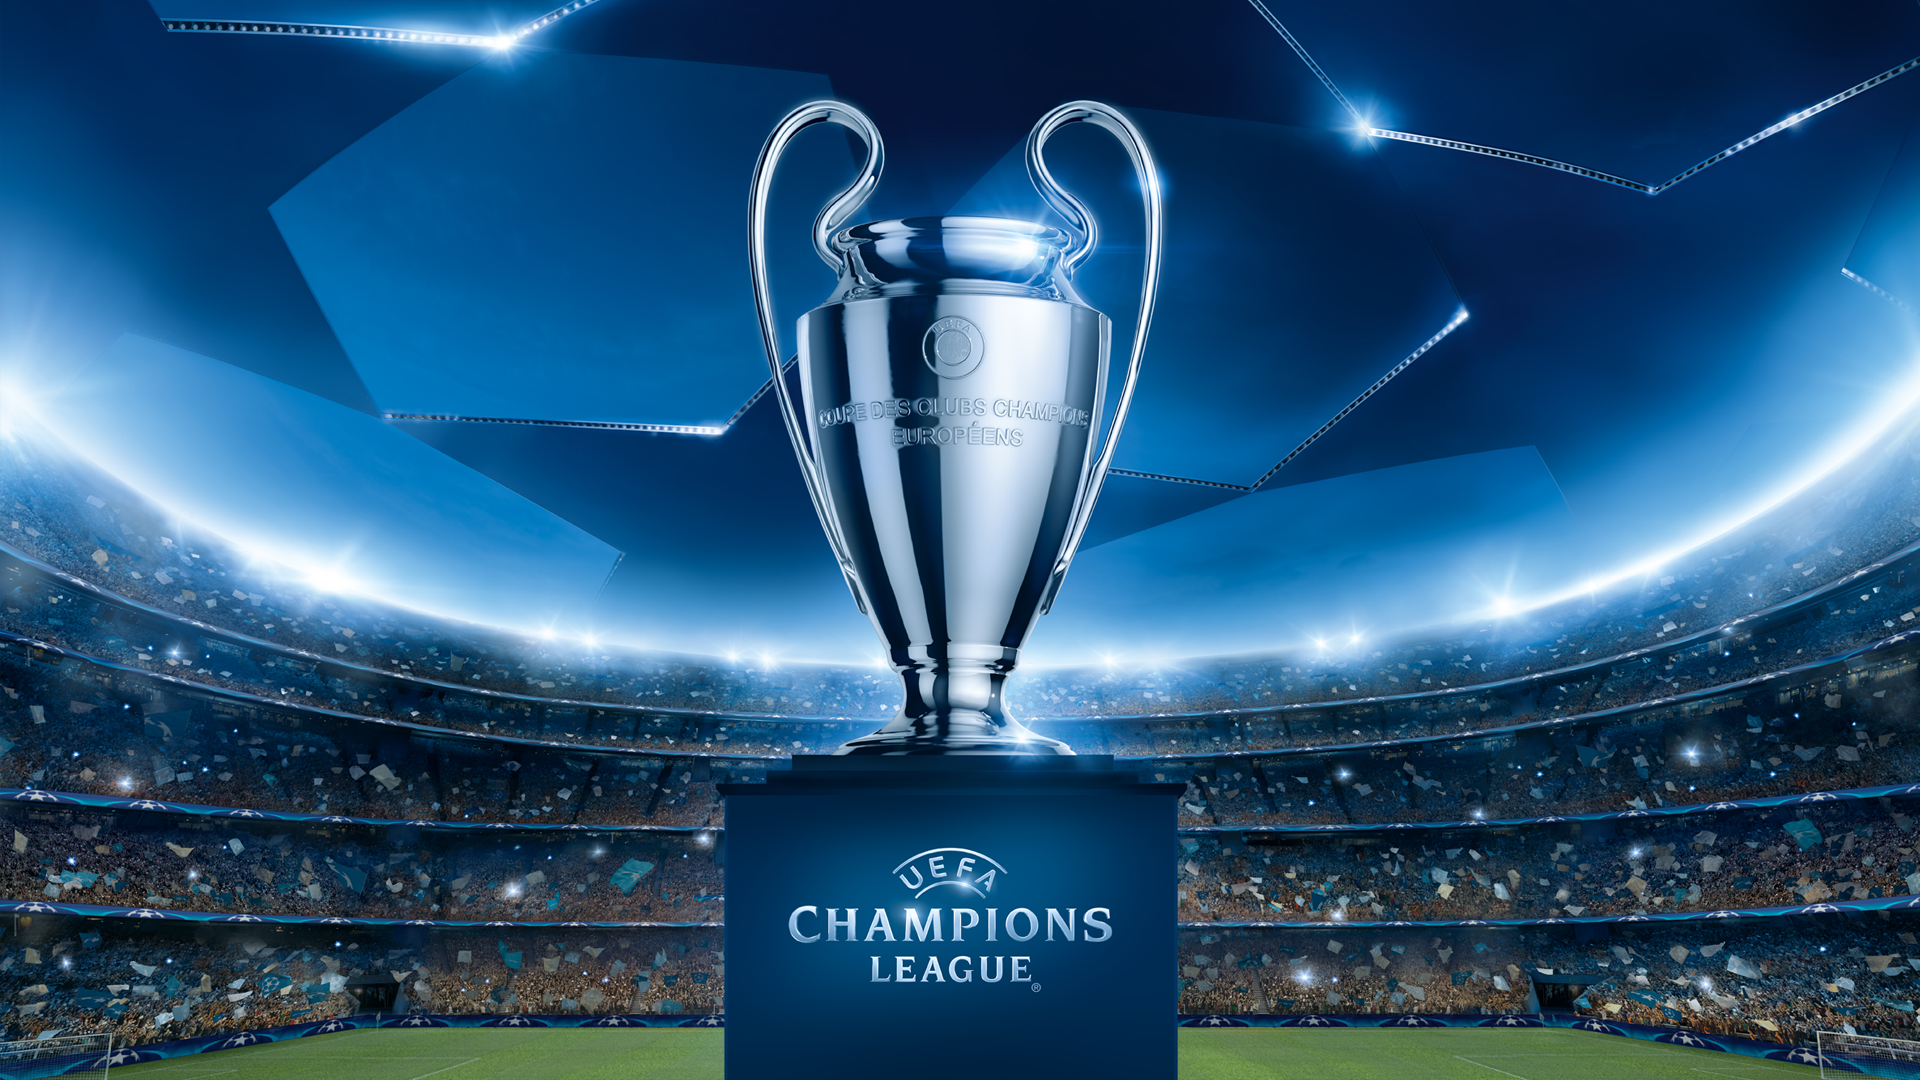 Won in UEFA Champions League